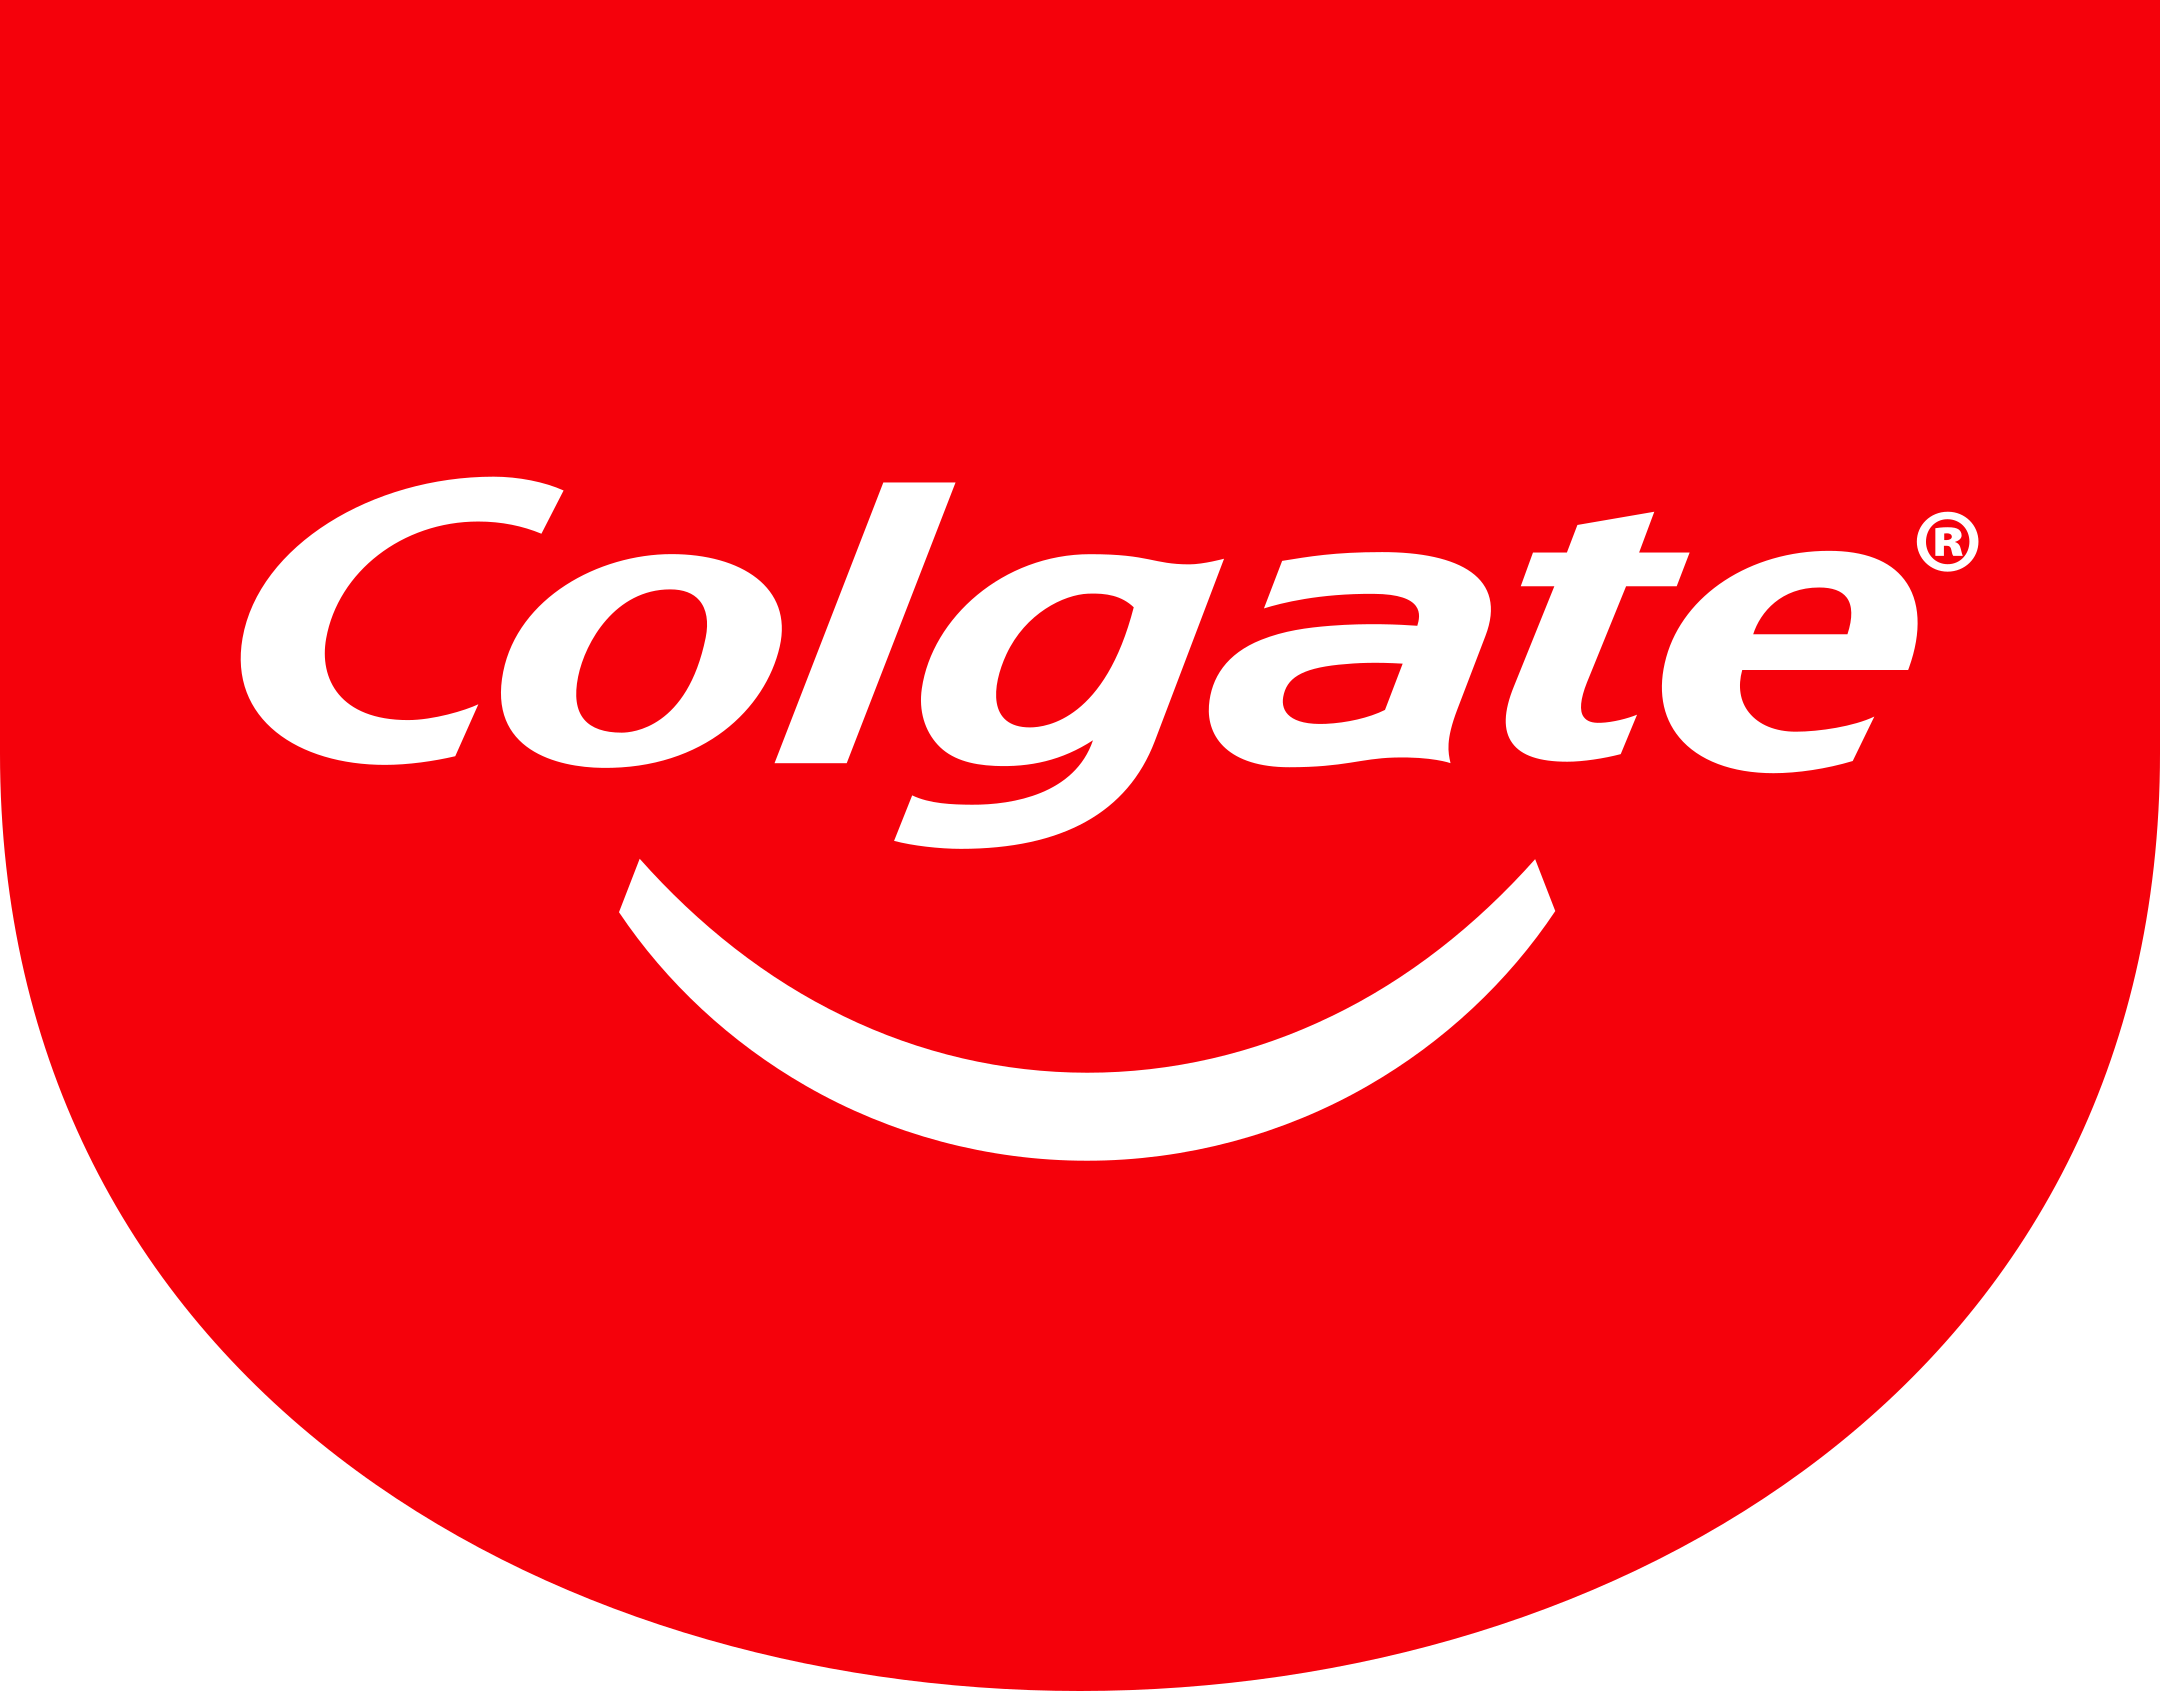 colgate logo 1 1 - Colgate Logo